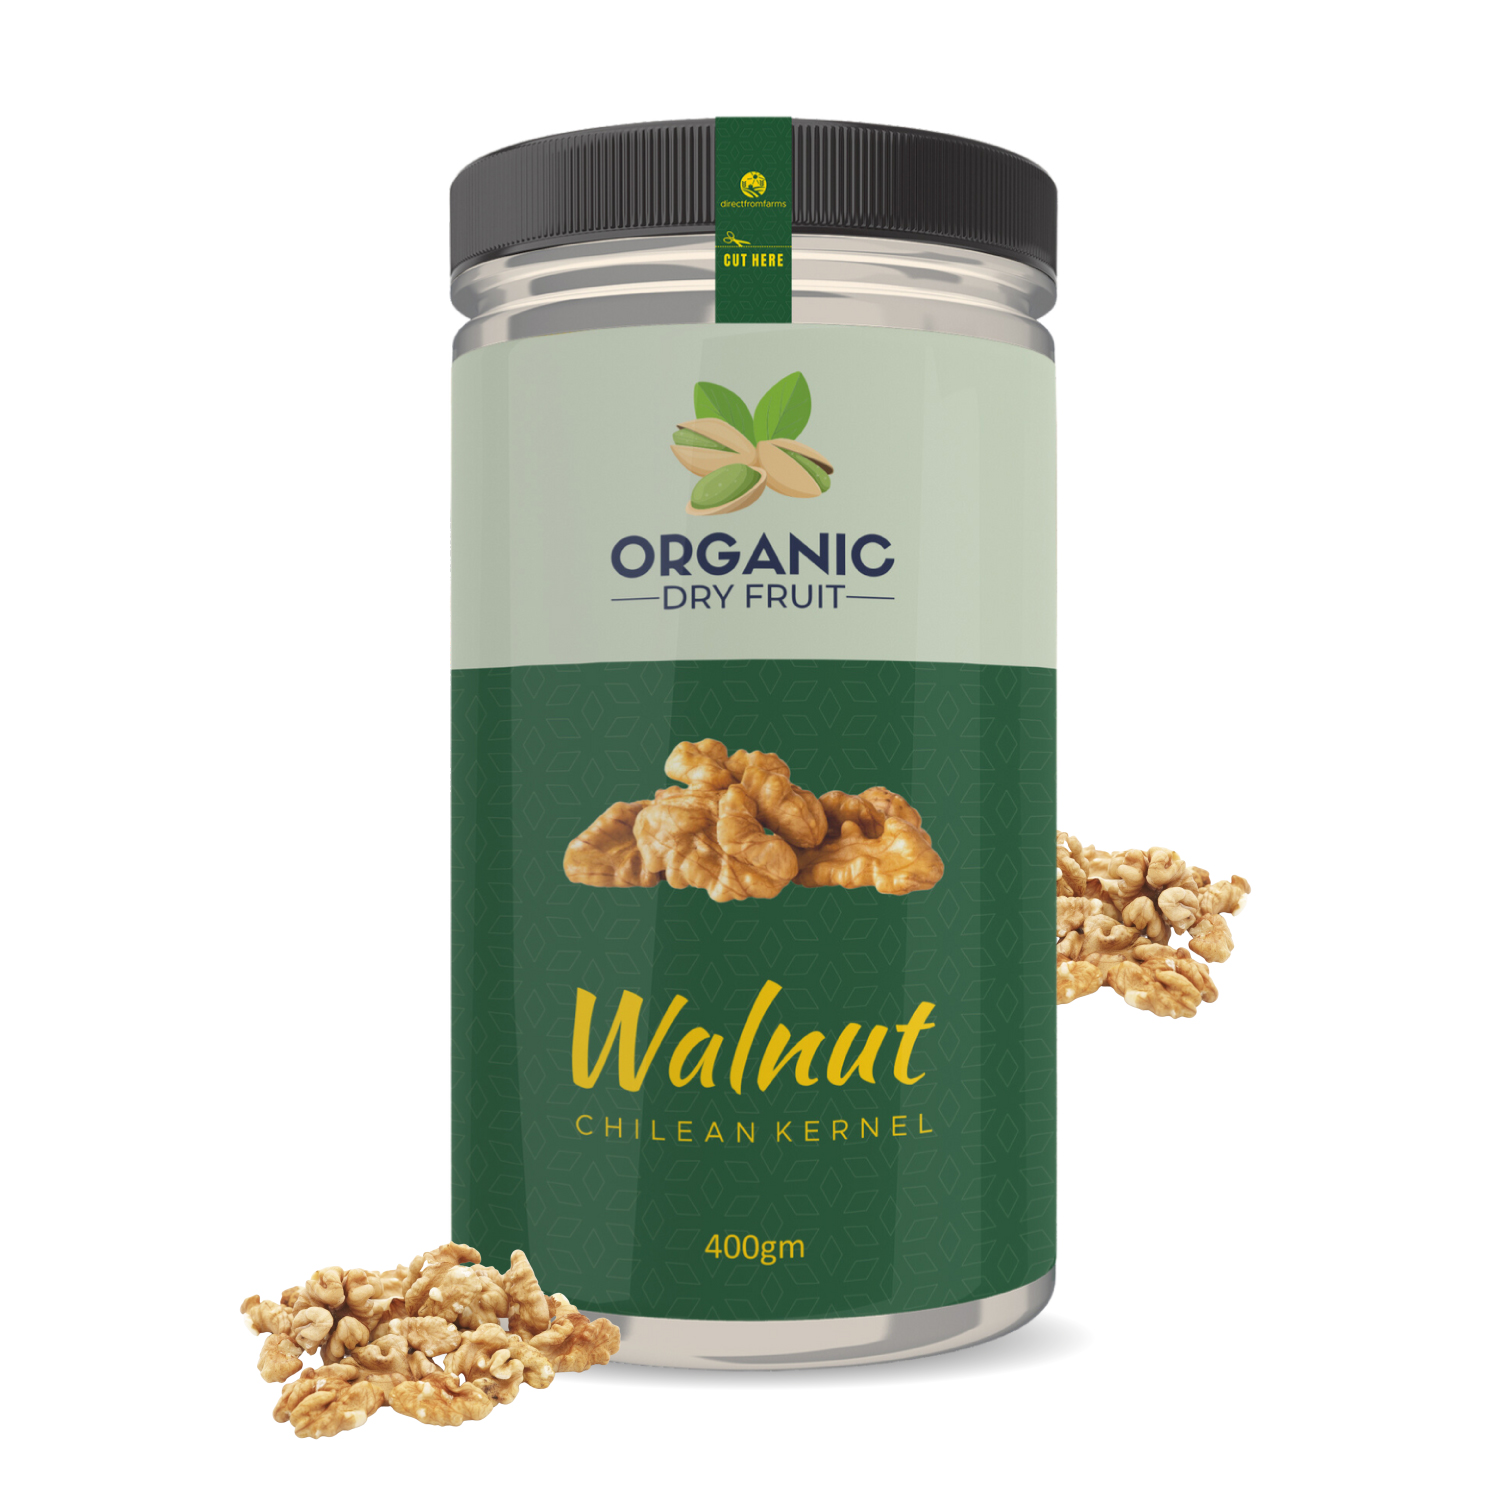 Organic Dry Fruits Premium Quality OF Chilen Walnuts Kernel